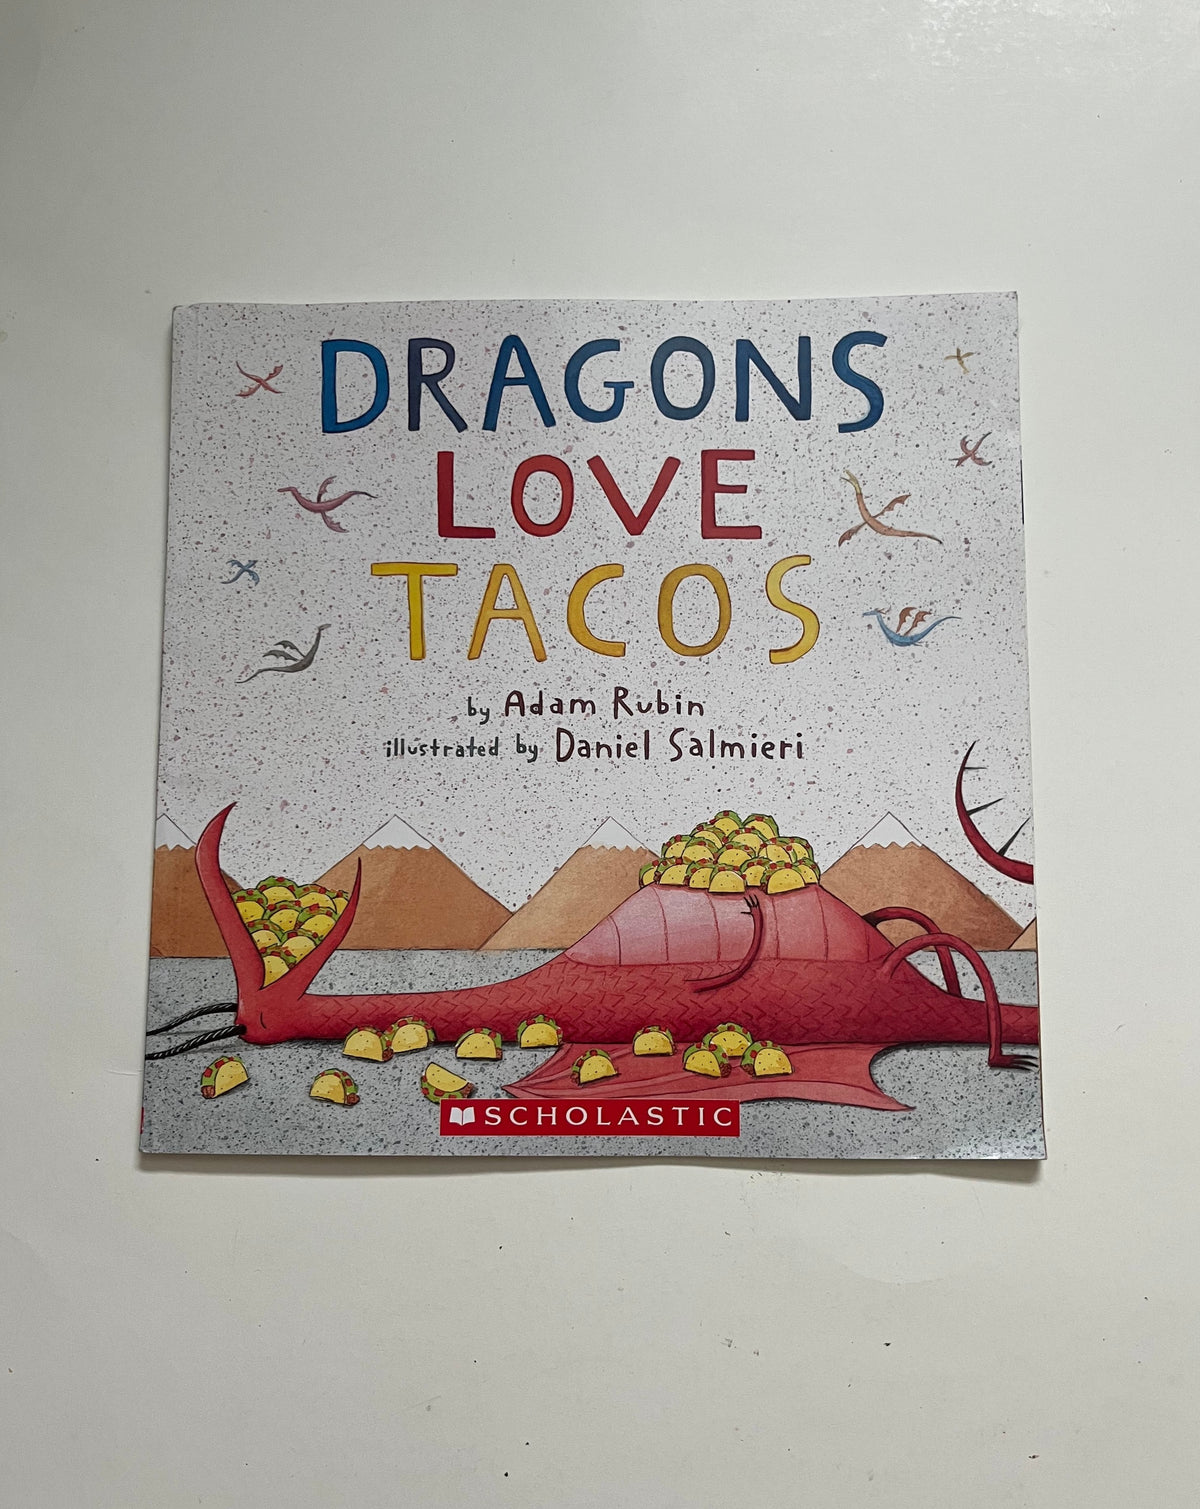 Dragons Love Tacos by Adam Rubin and Daniel Salmieri